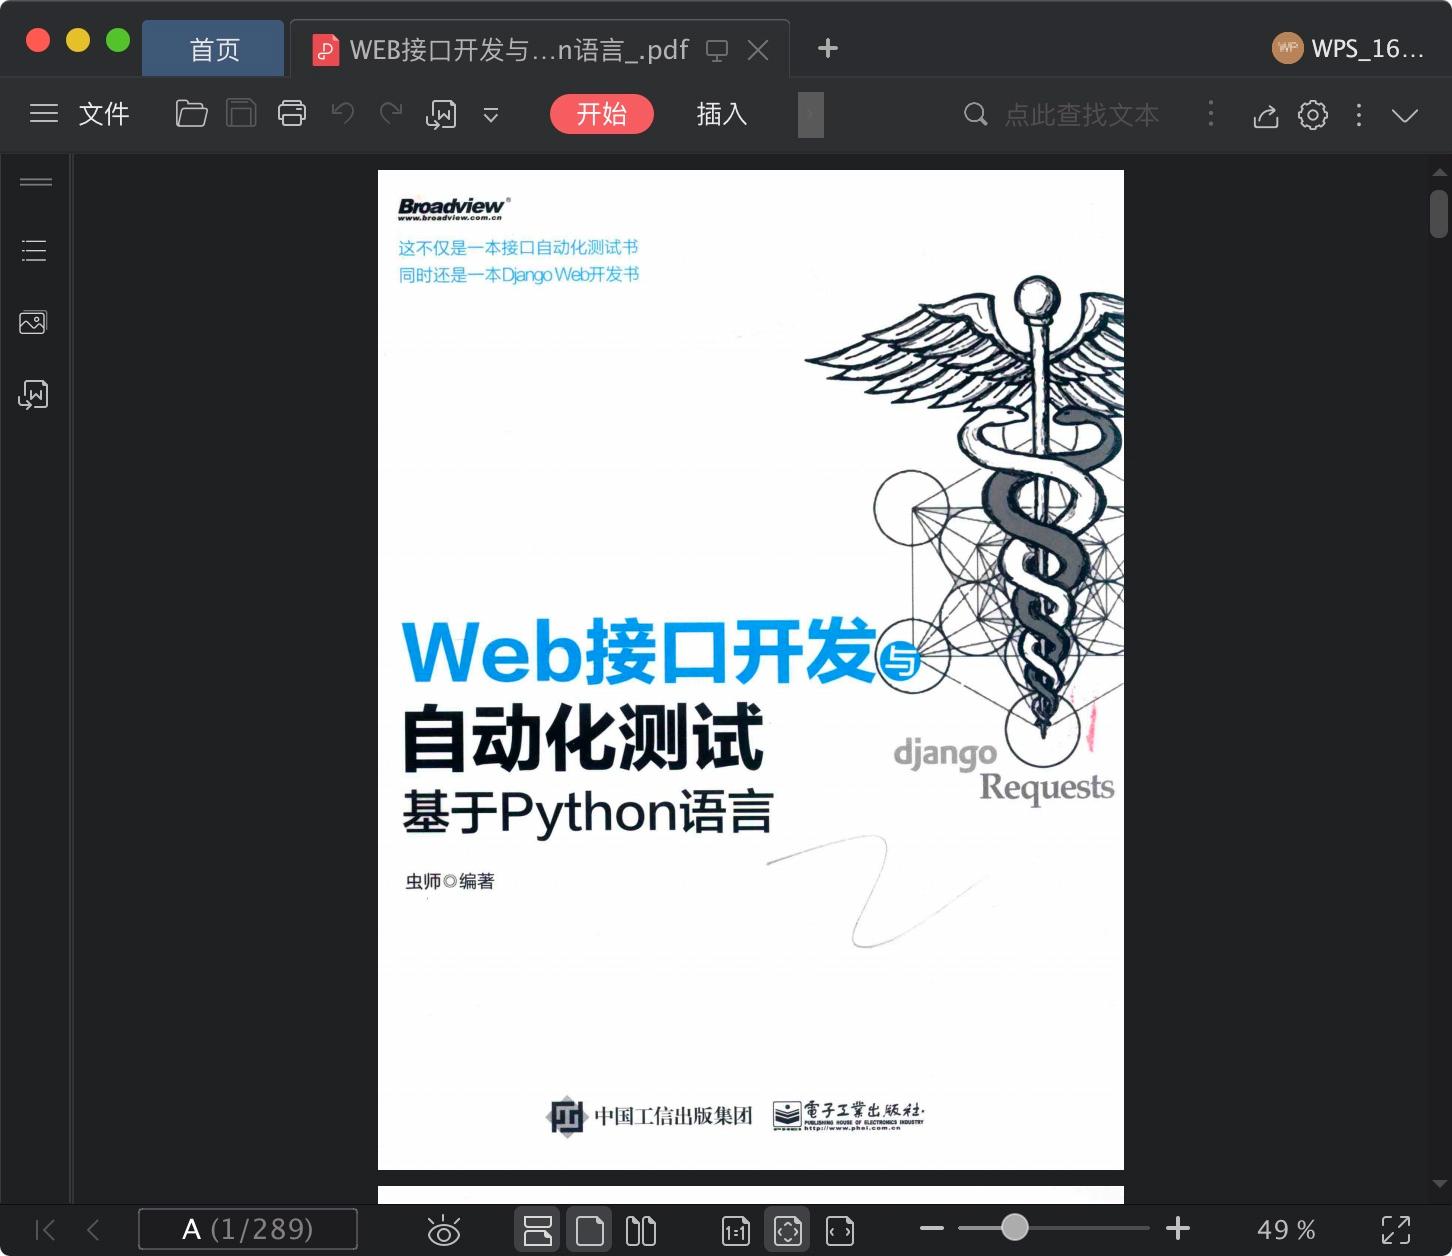 WEB接口开发与自动化测试基于python语言pdf电子书籍下载百度云